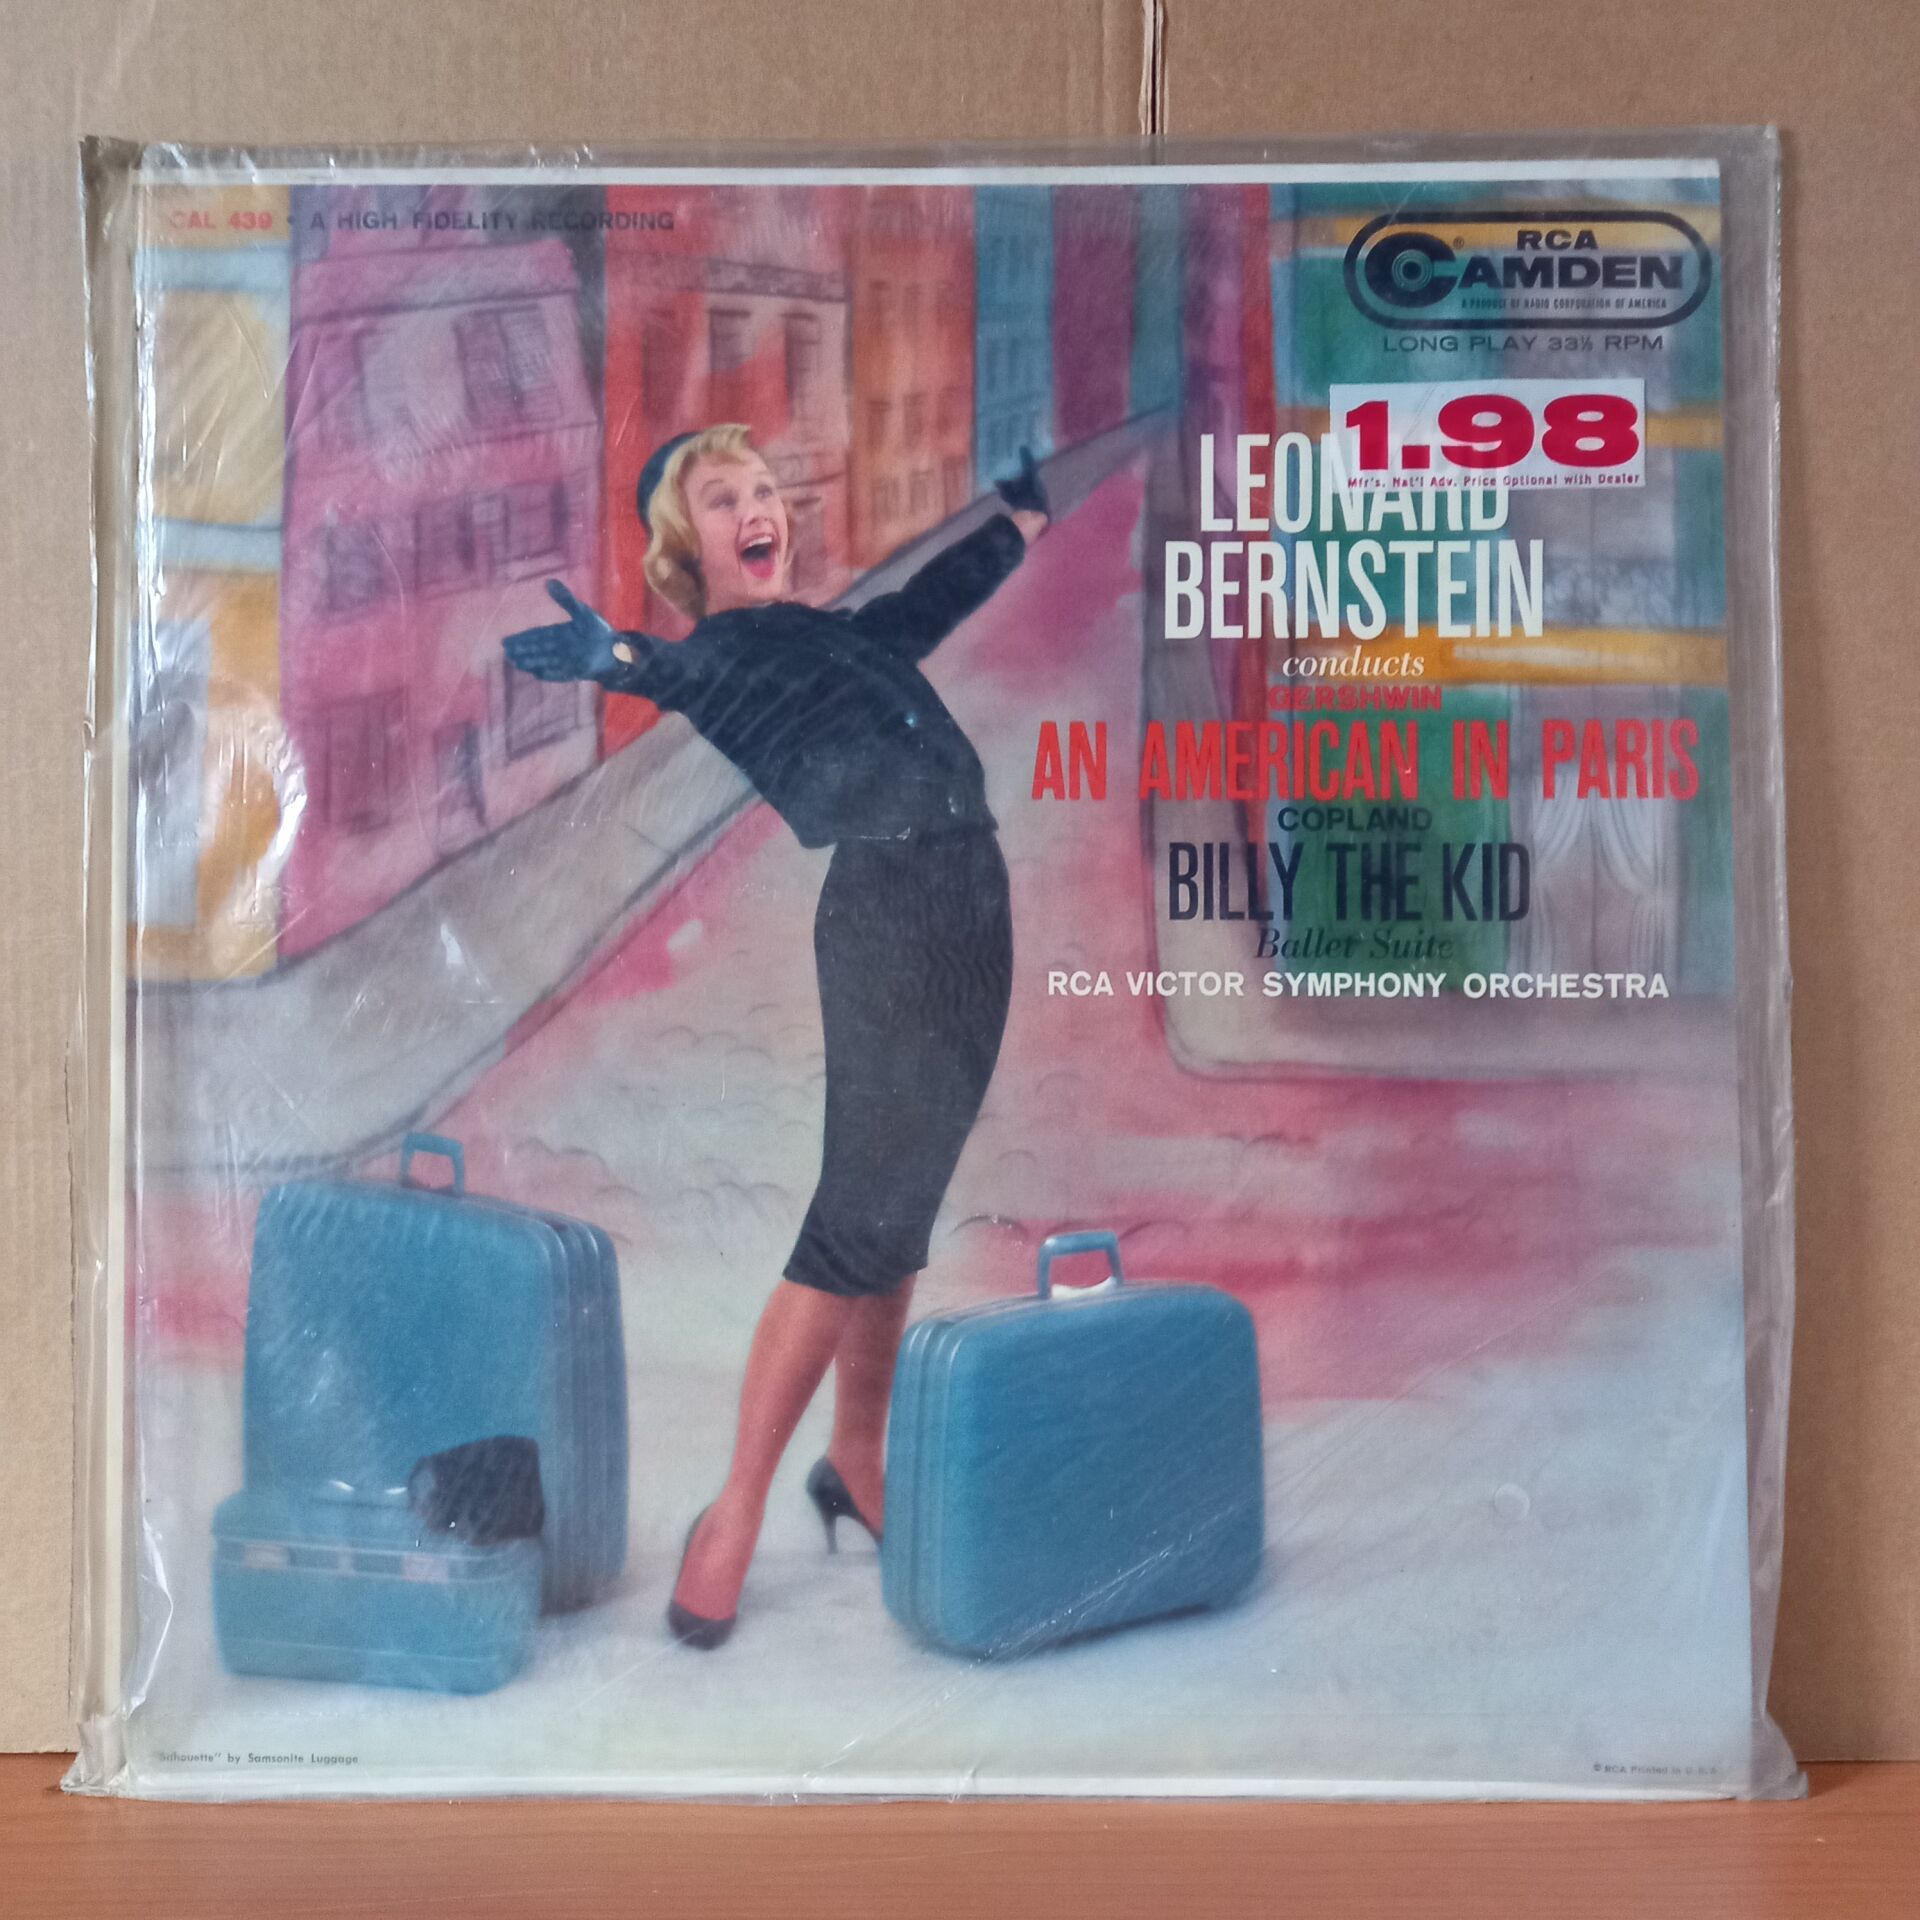 LEONARD BERNSTEIN CONDUCTS GERSWHIN AN AMERICAN IN PARIS COPLAN BILLY THE KID BALLET SUITE / RCA VICTOR SYMPHONY ORCHESTRA (1958) - LP DÖNEM BASKISI SIFIR PLAK